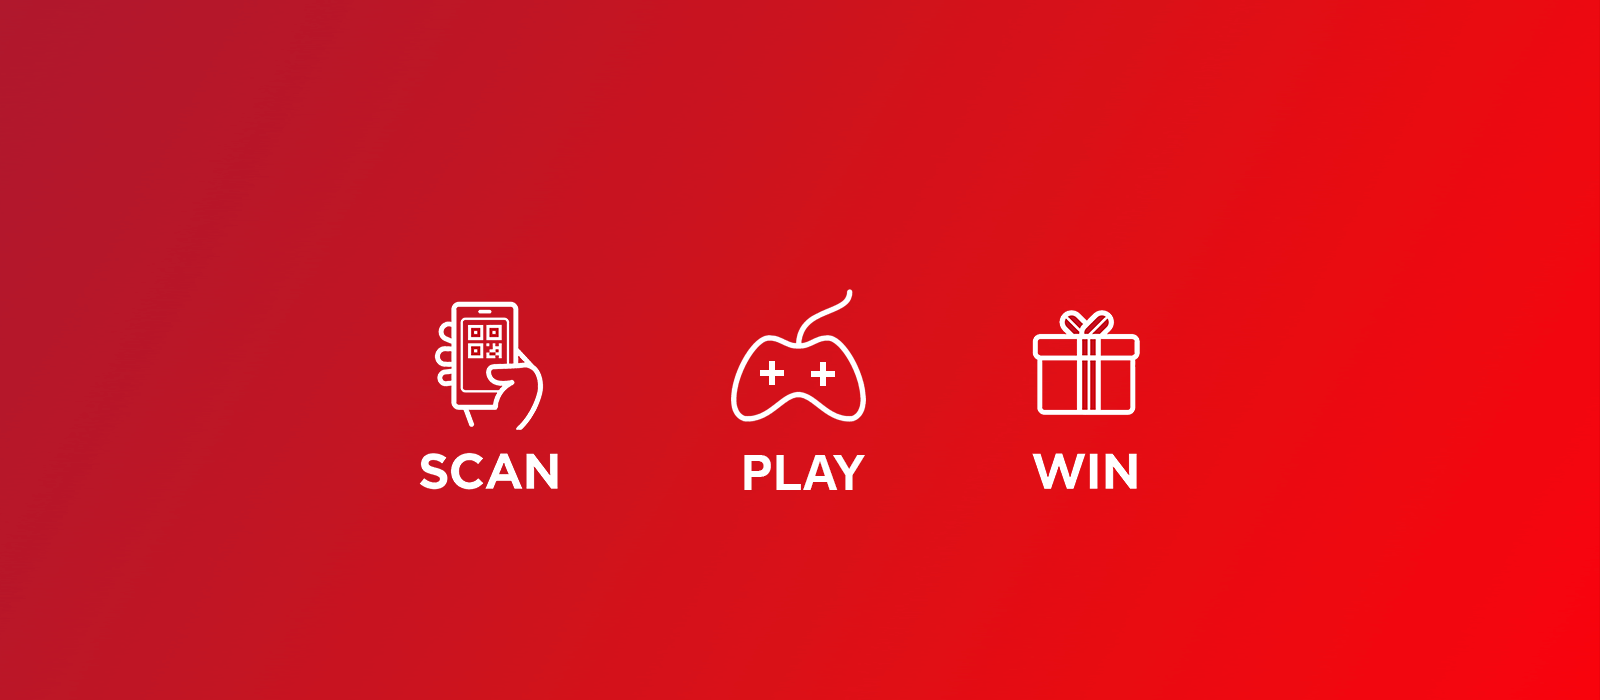 Scan, Play, Win Icons auf rotem Hintergrund.